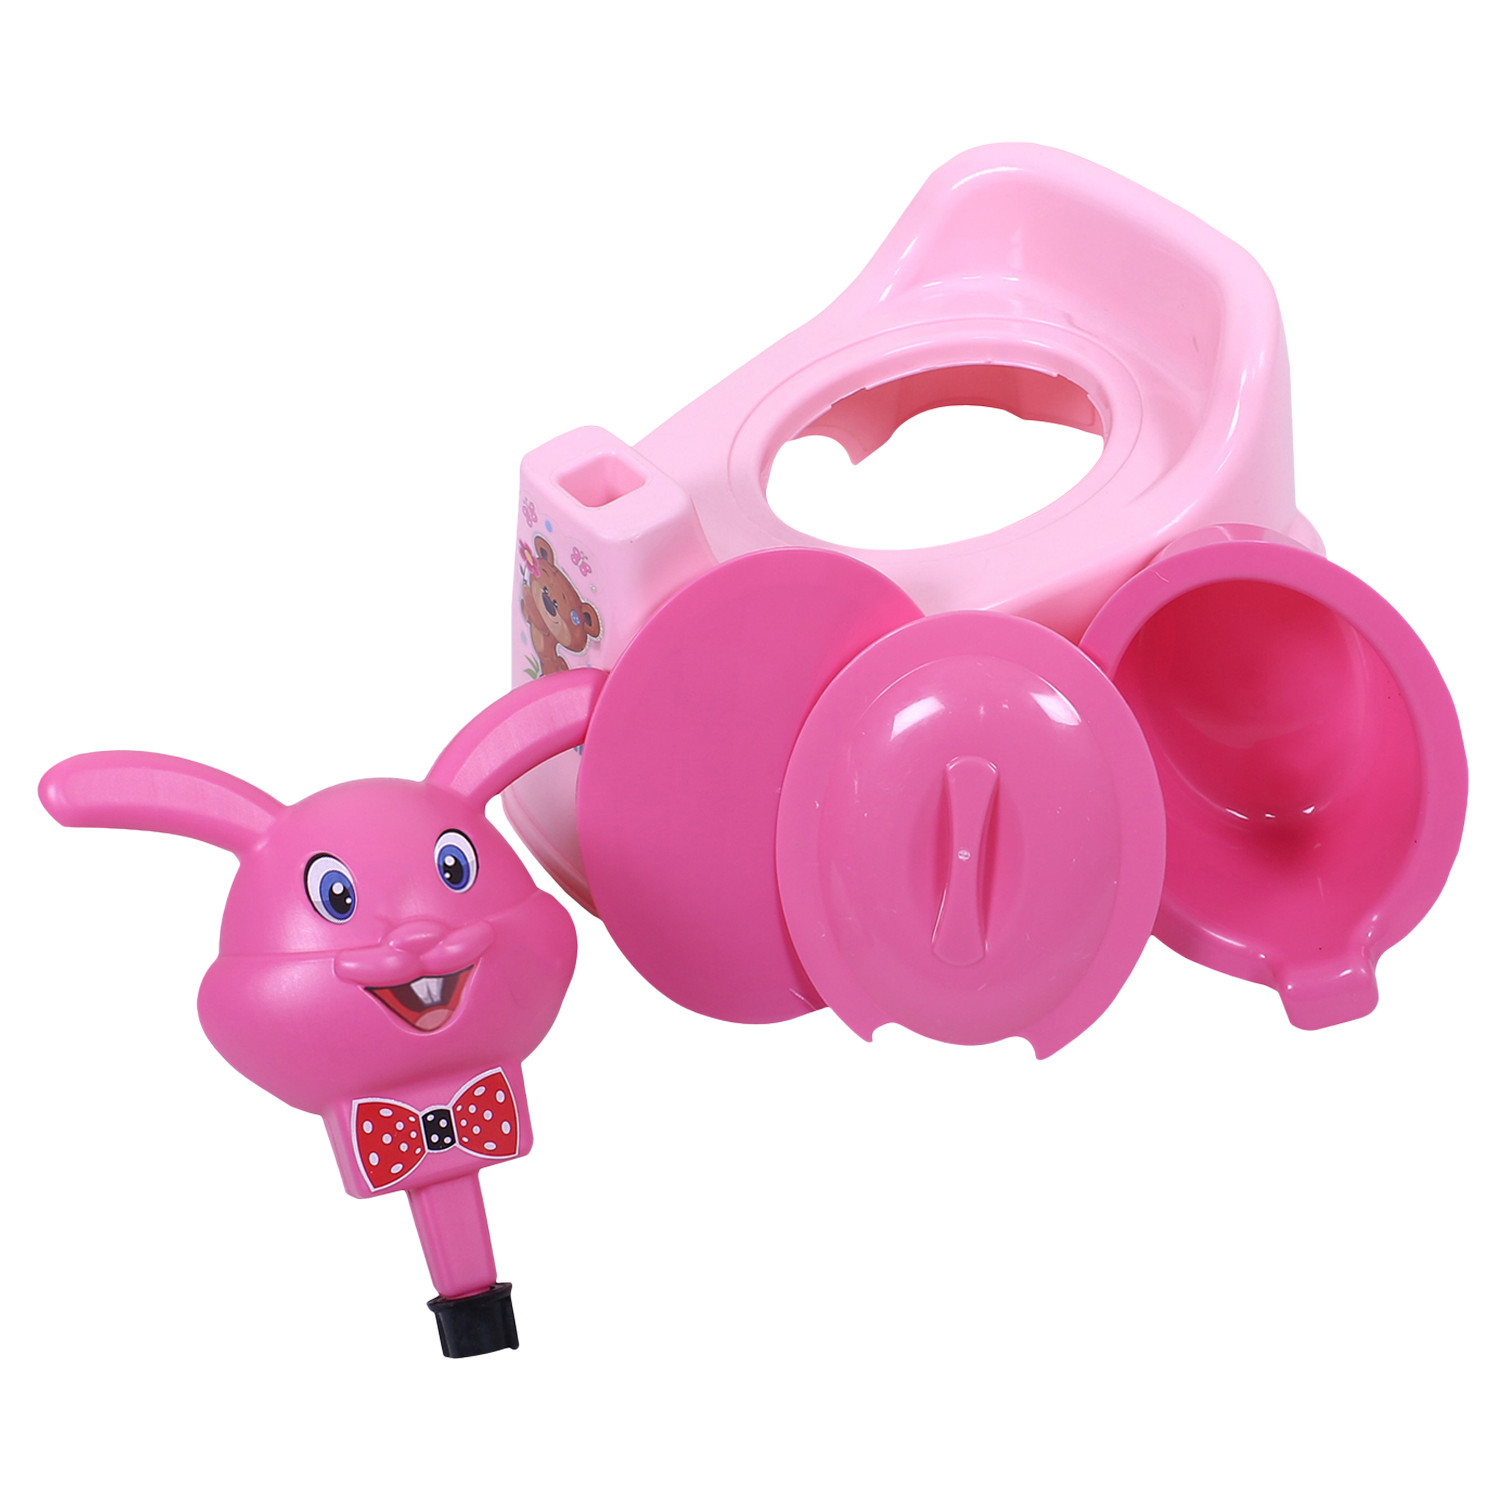 Kuber Industries Potty Toilet Trainer Seat | Plastic Potty Training Seat | Baby Potty Seat | Potty Seat For Child | Potty Training Seat for Kids | Rabbit Design | Pink